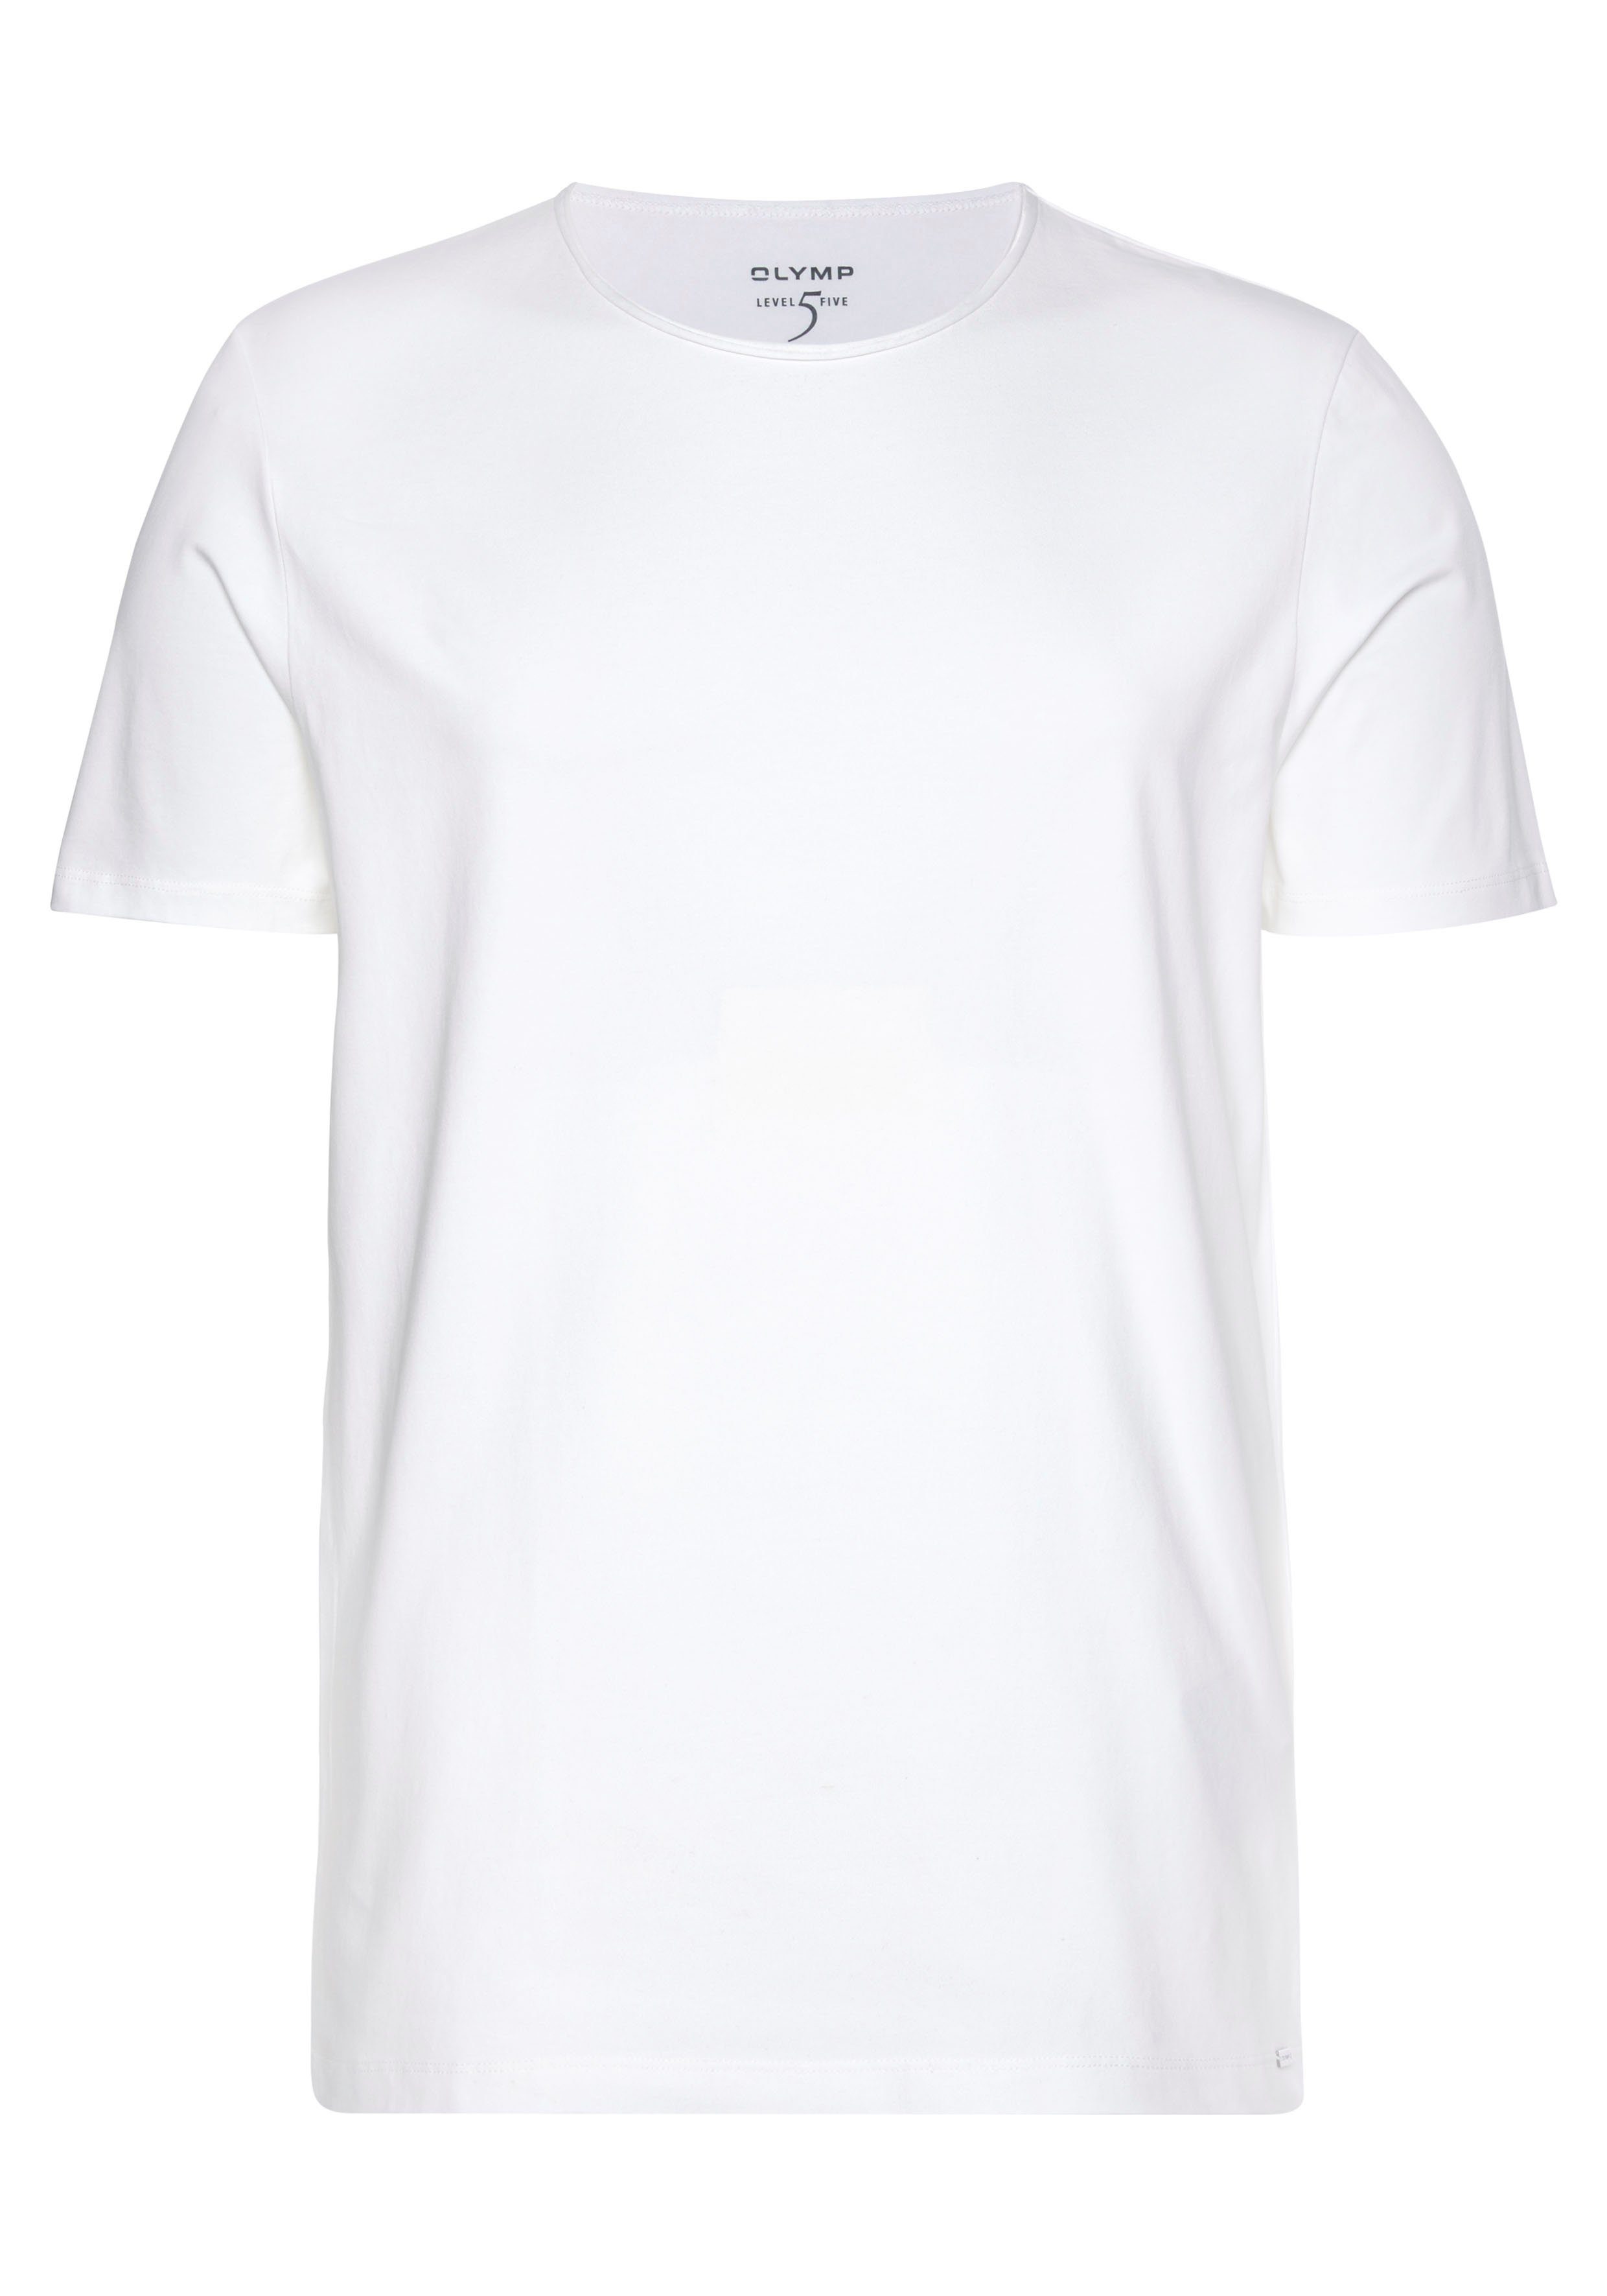 OLYMP T-Shirt weiß feinem body Five Jersey Level aus fit